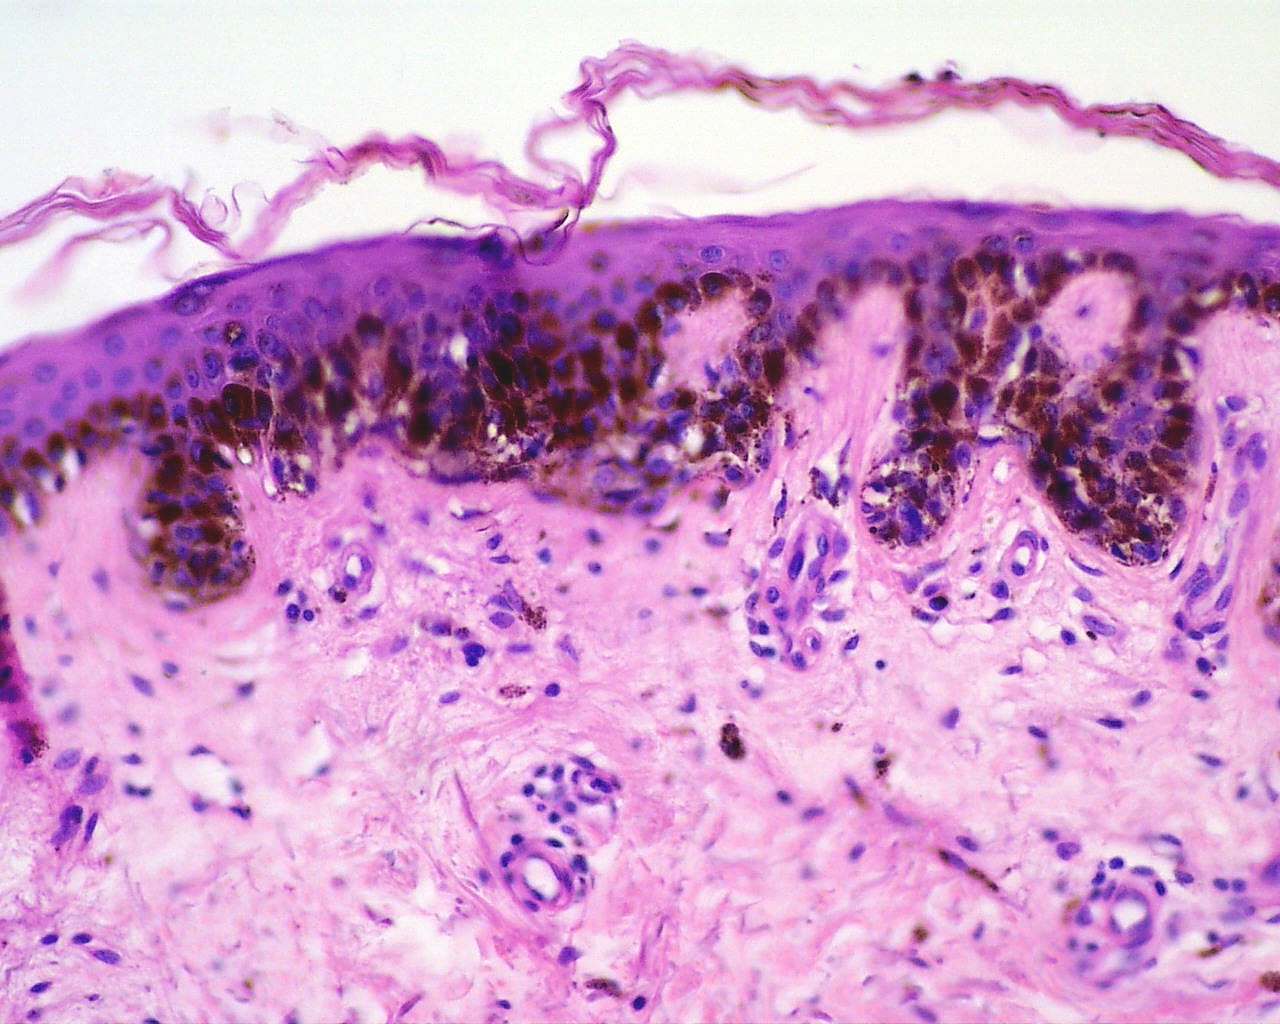 Skin tissue under the microscope. Wikimedia